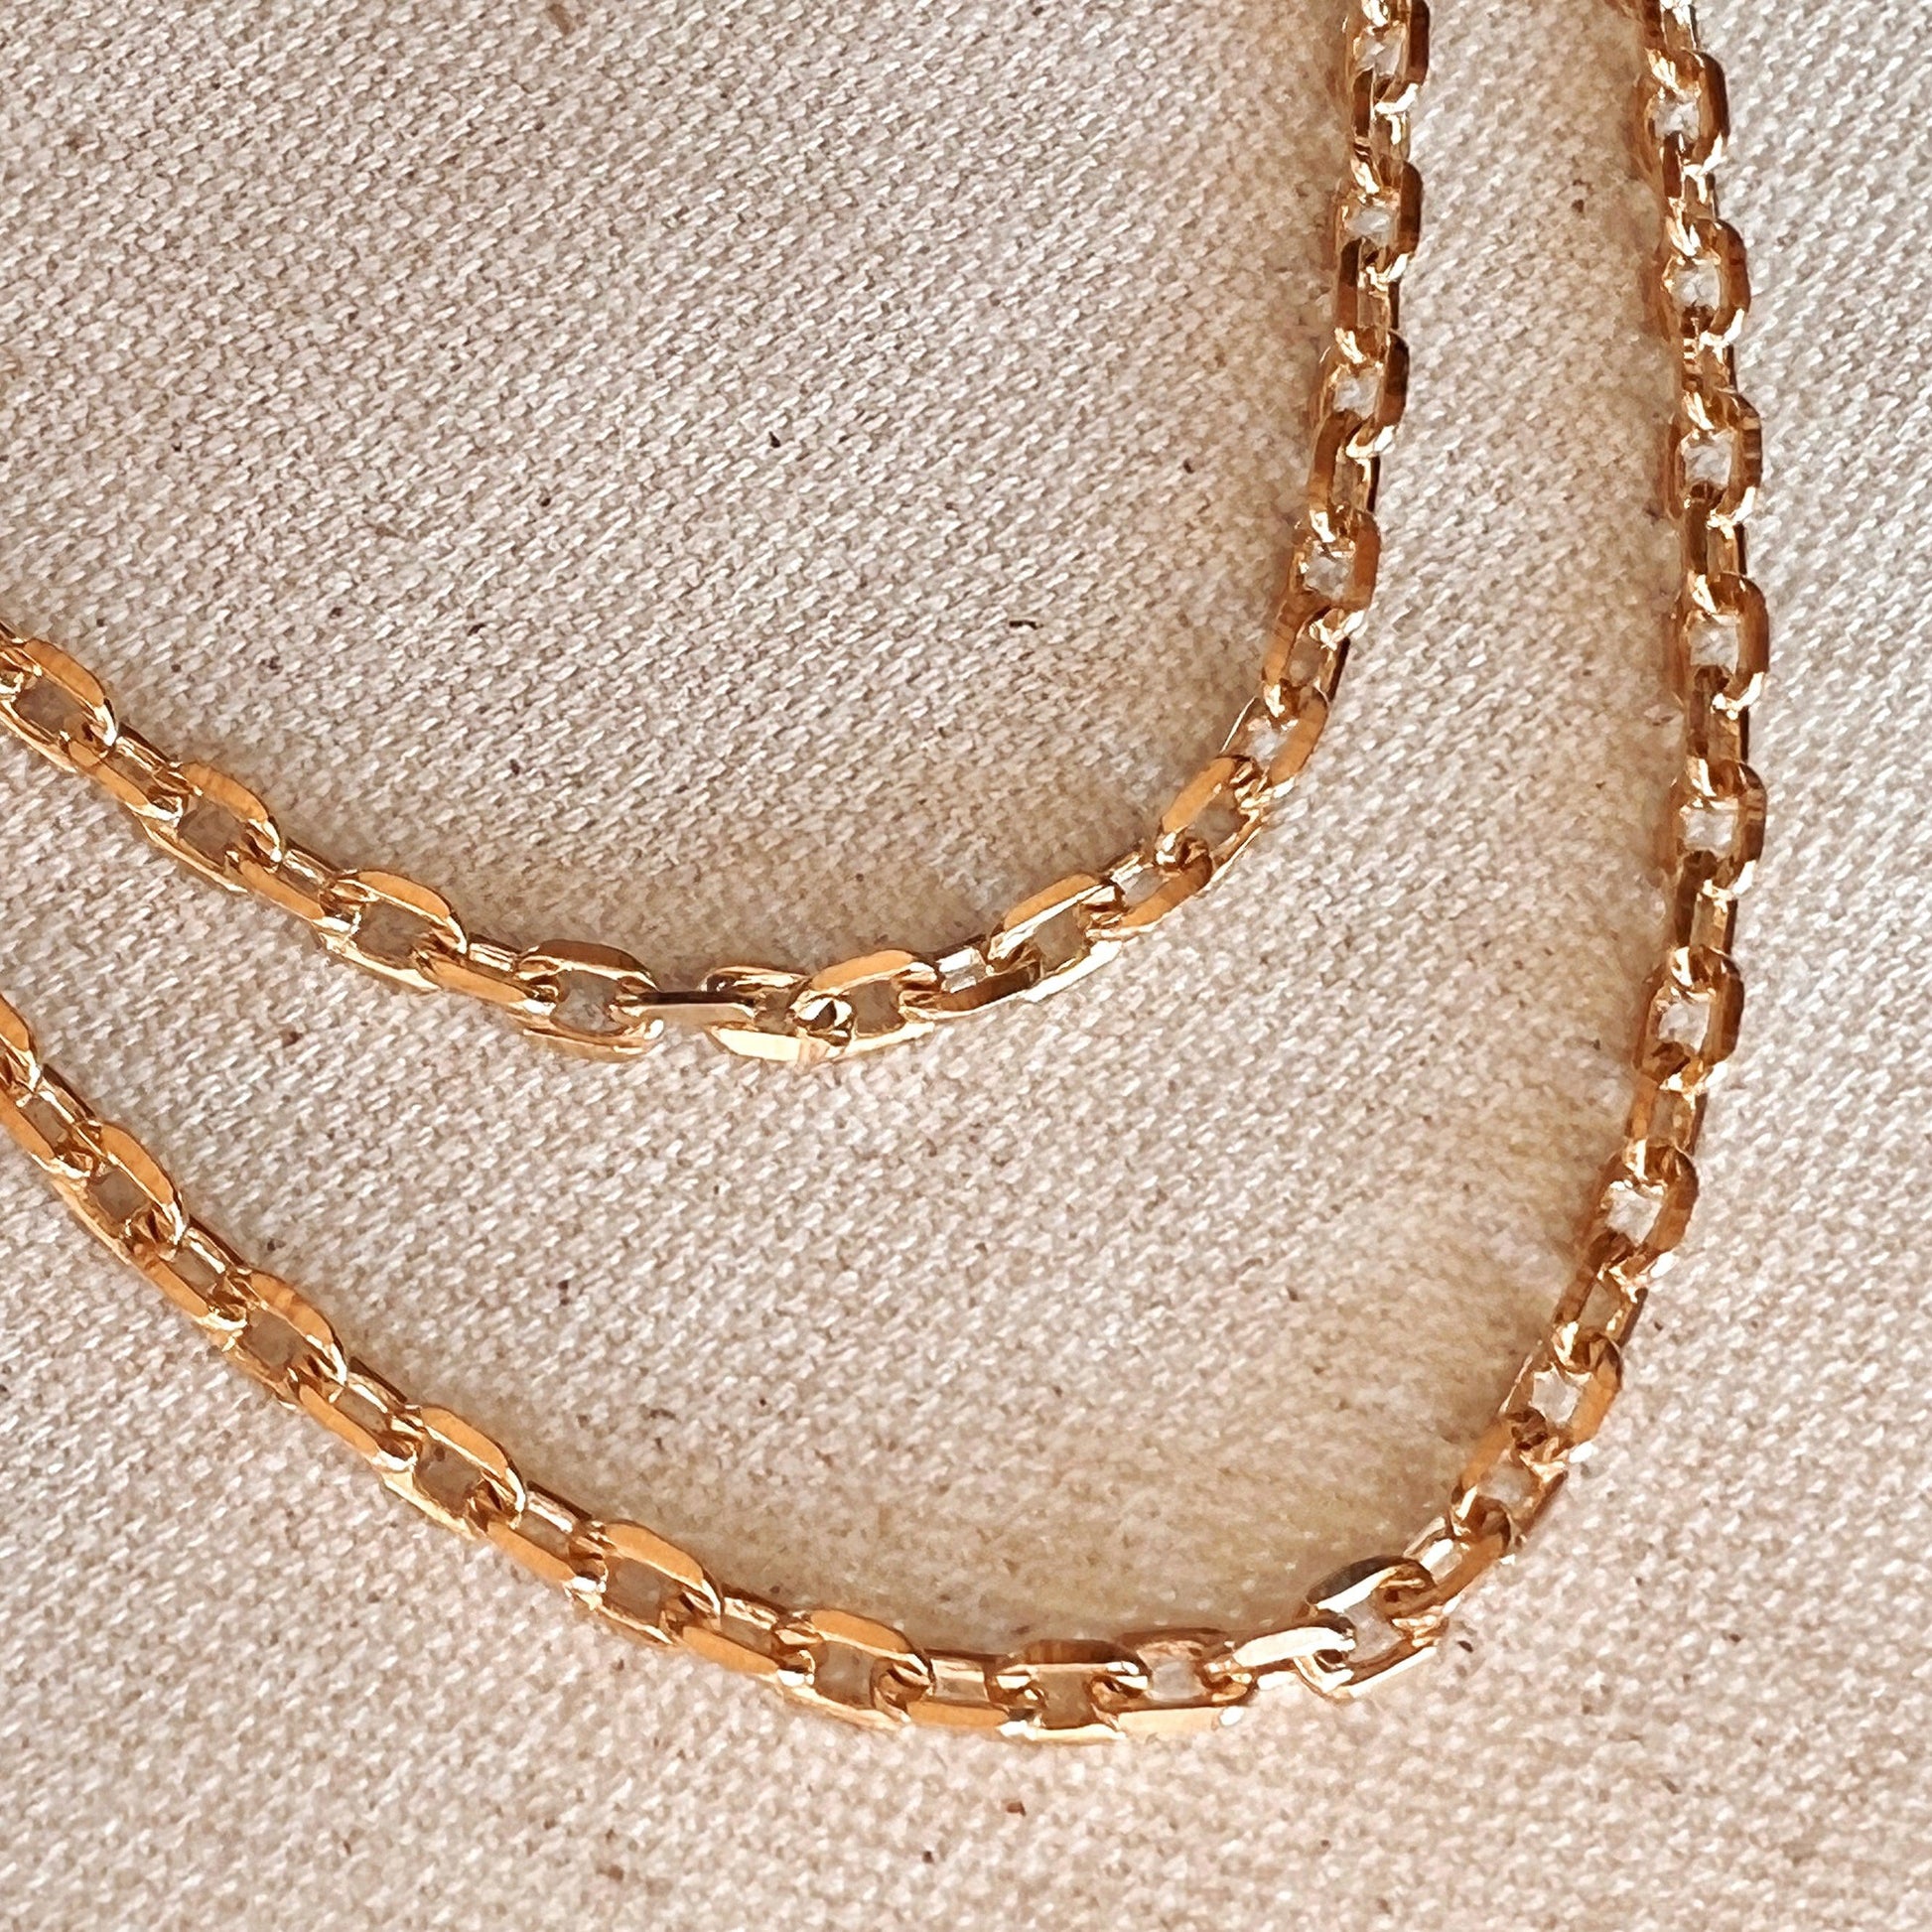 GoldFi Gorgeous Unique 18k Gold Filled Link Chain